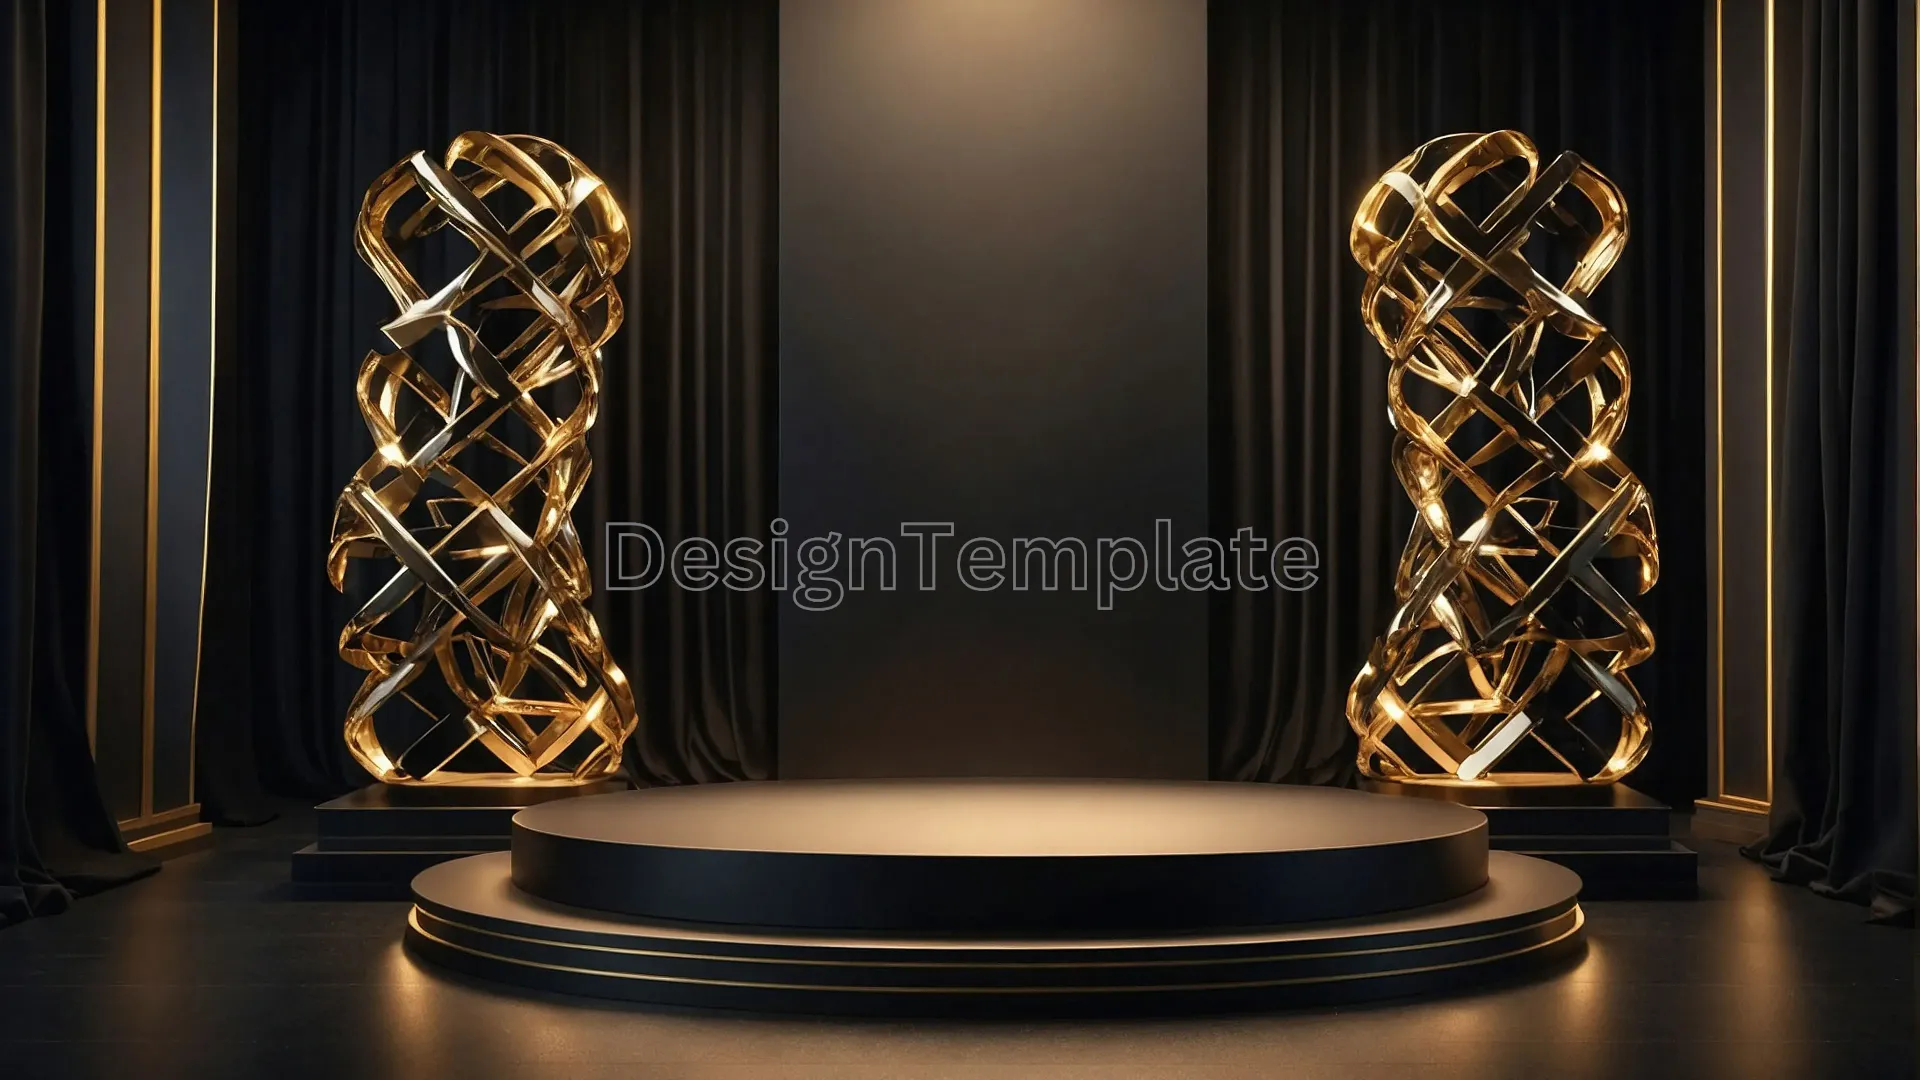 Elegant Award Show Podium with Golden Details Background